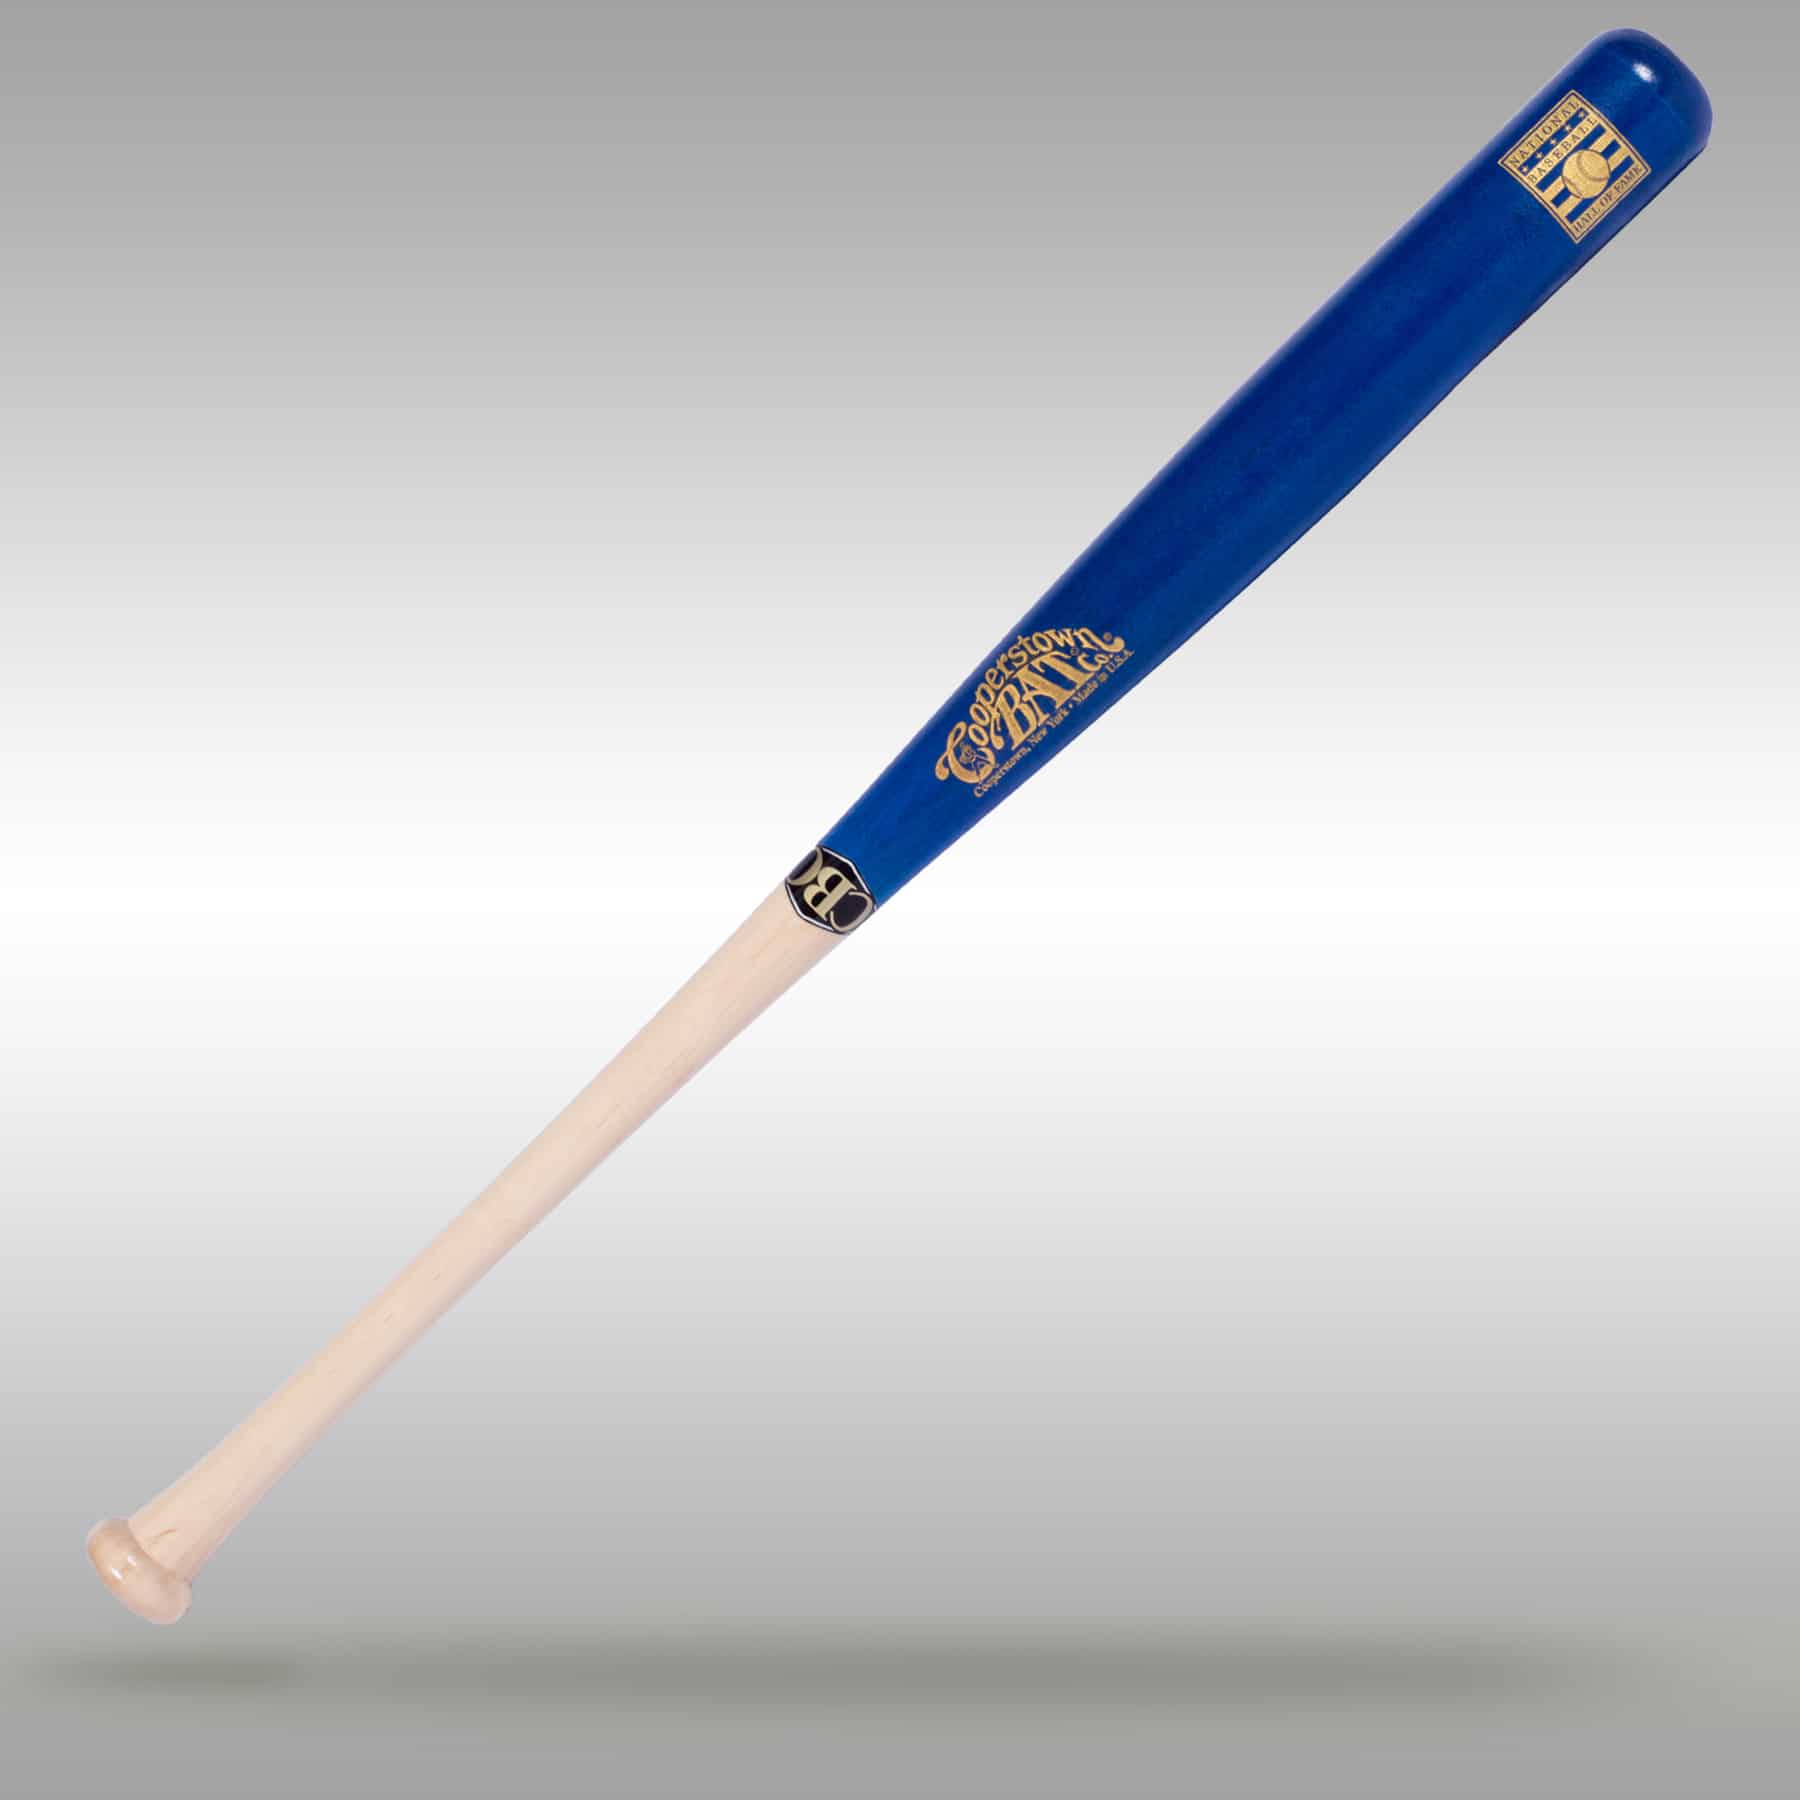 Personalized Player Award Baseball Bat - Cooperstown Bat Company